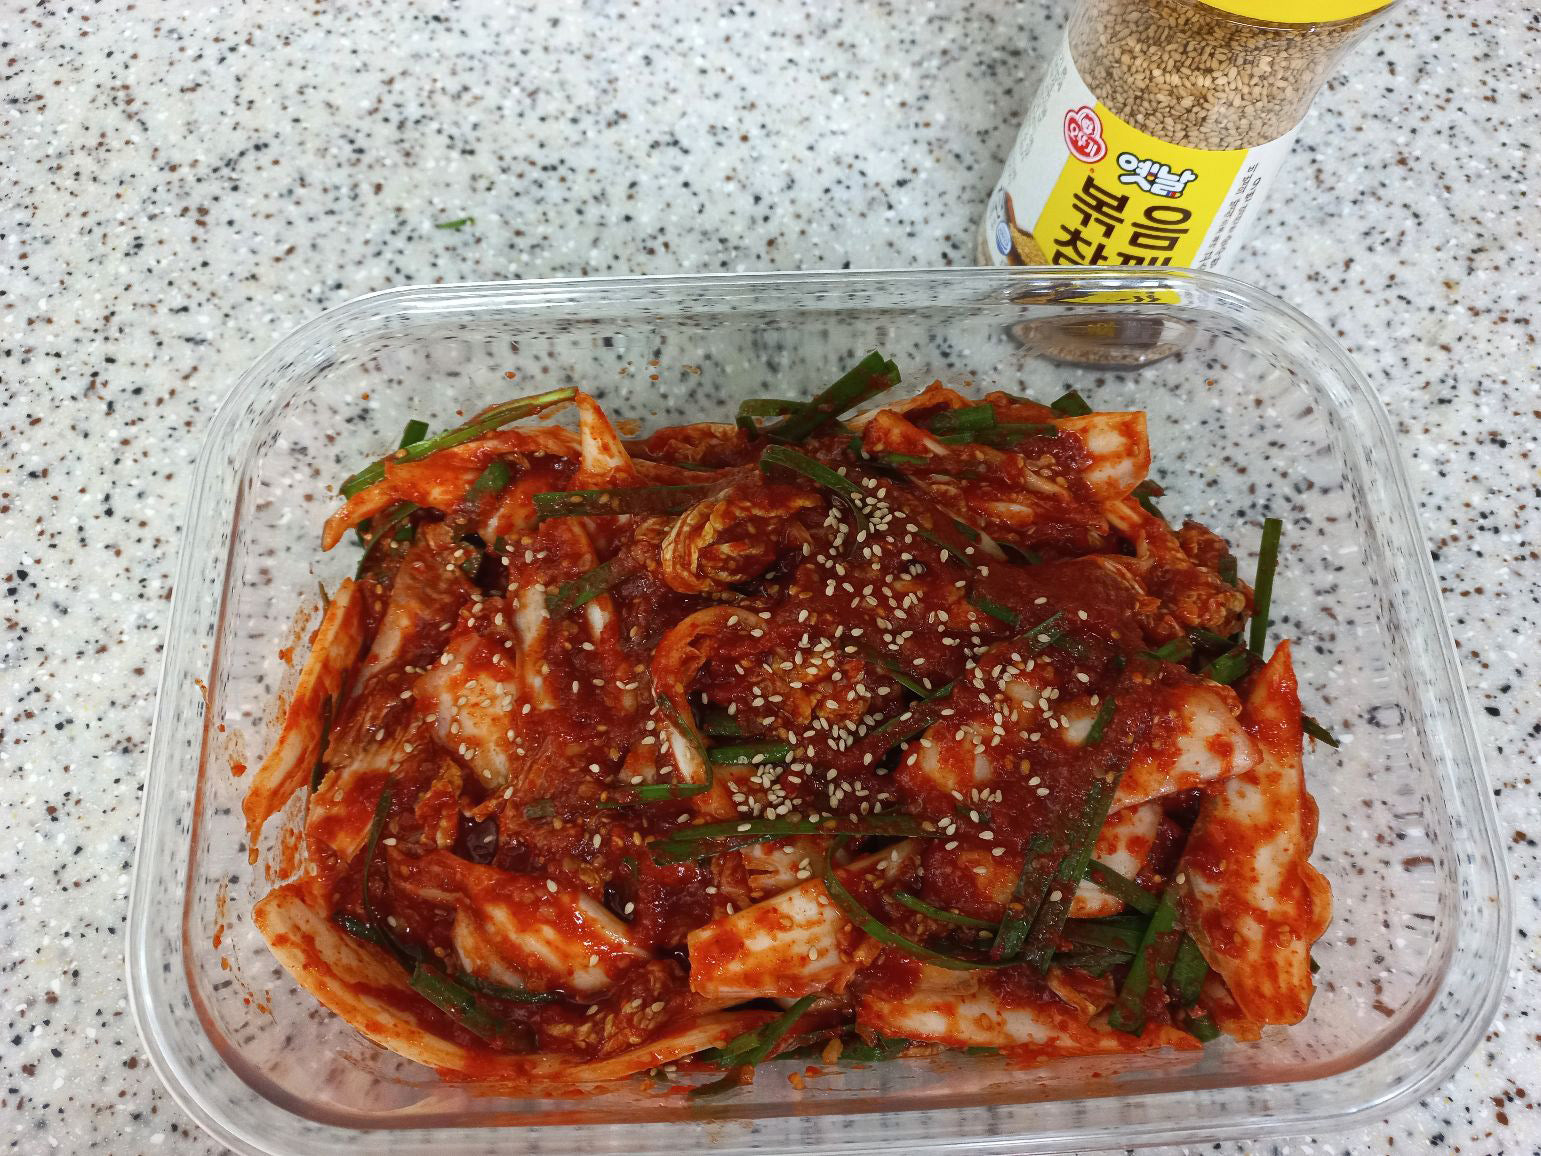 [Haetnim Maeul] 100% Korean Cheongyang Gochugaru (Very Spicy!)